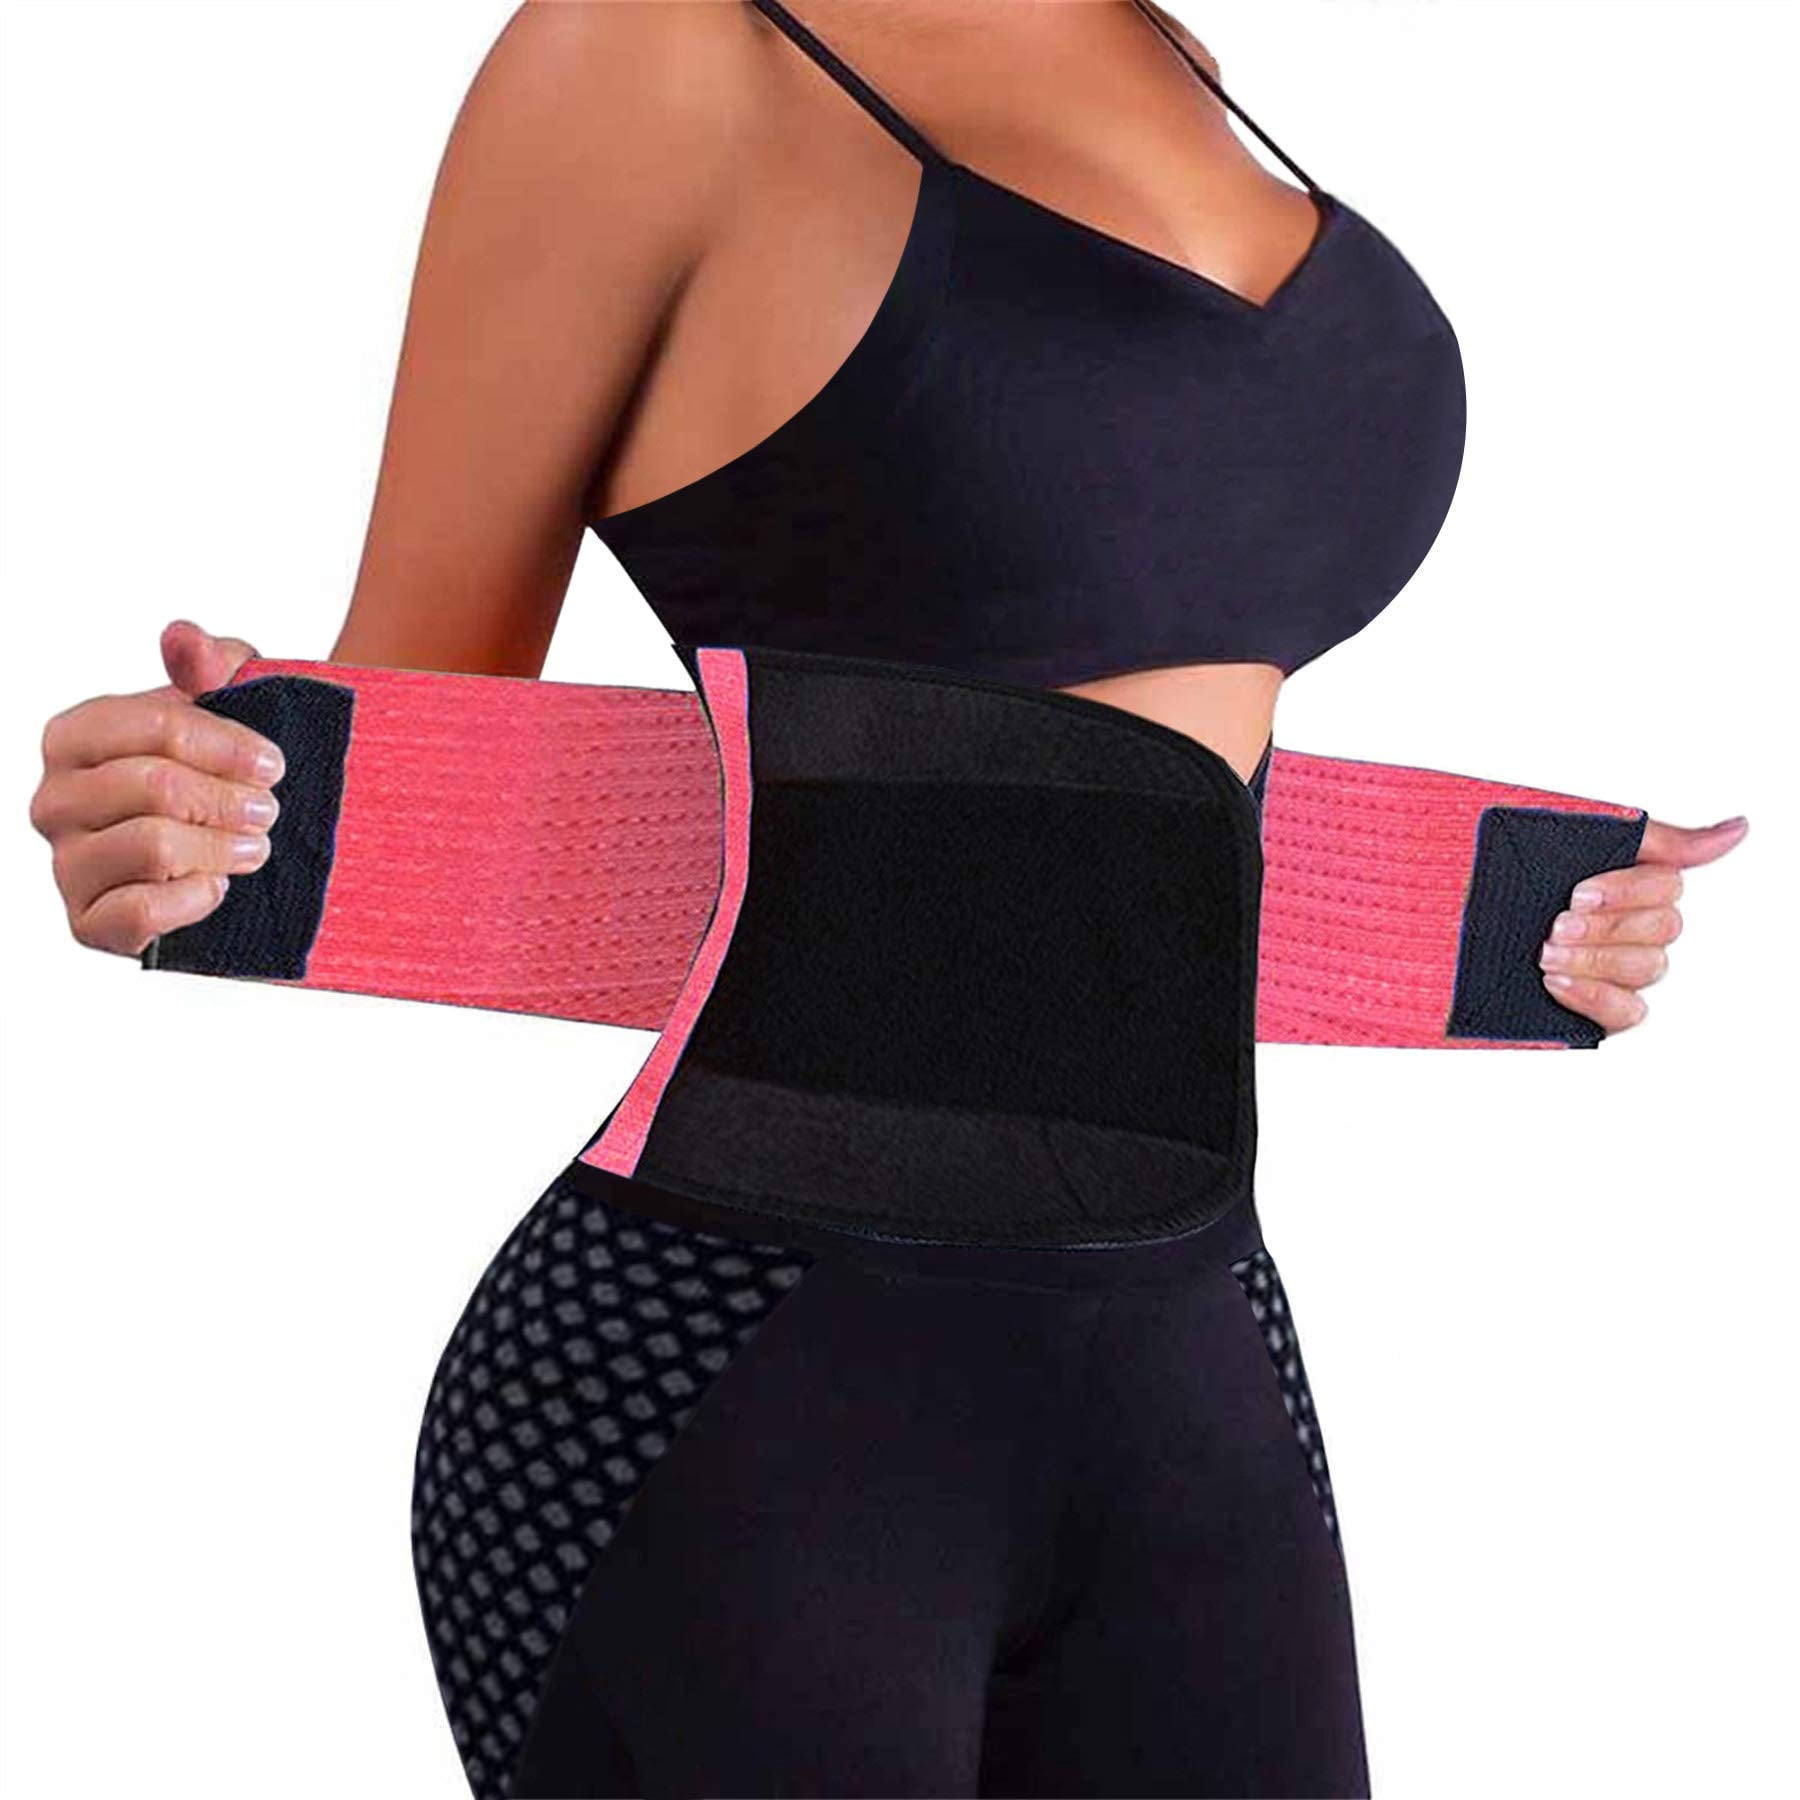 VITOMOR Waist Trainer For Women Lower Belly Fat Waist Cincher Trimmer  Weight Loss Slimming Body Shaper Belt For Workout Fitness 